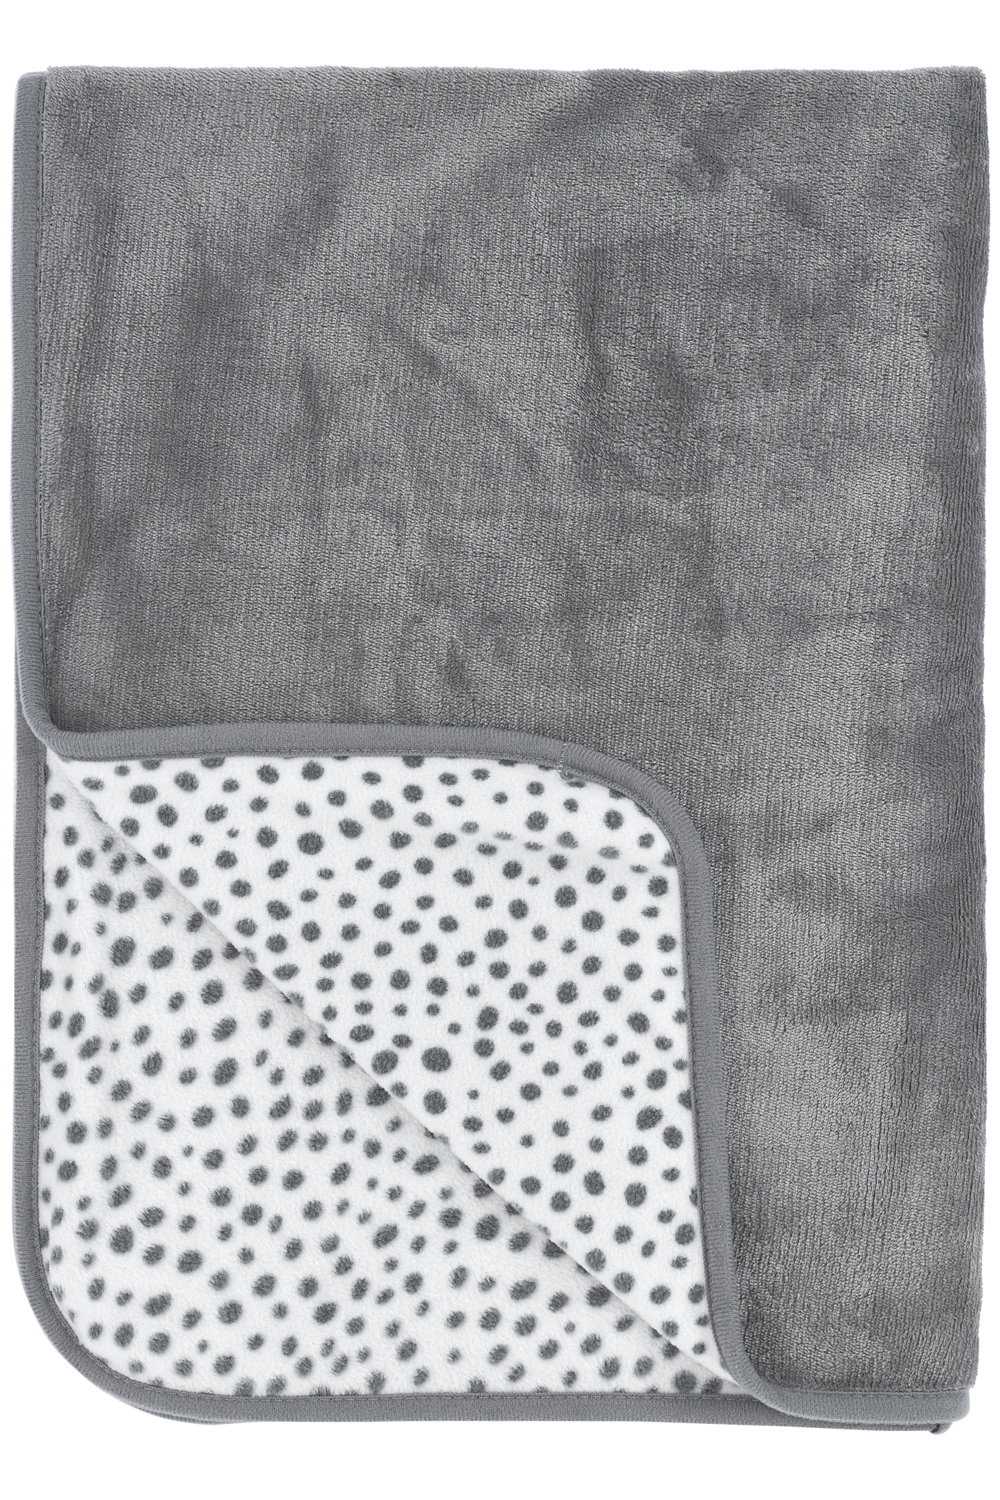 Travel Blanket Fleece Cheetah - Grey - 75x100cm